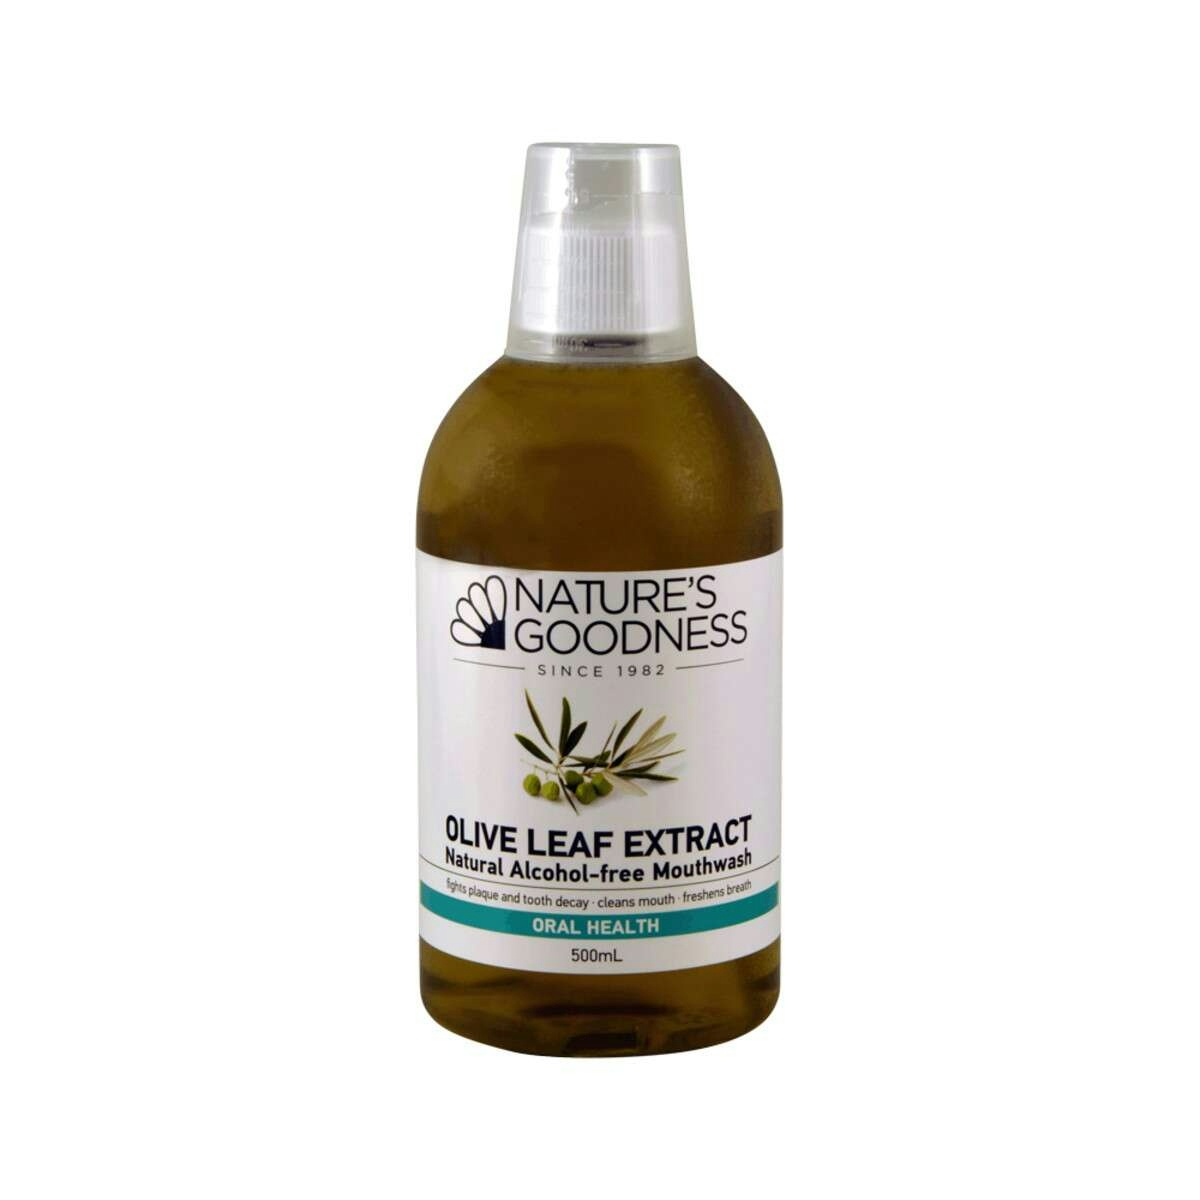 image of Nature's Goodness Olive Leaf Extract Mouthwash (Alcohol-Free) 500ml on white background